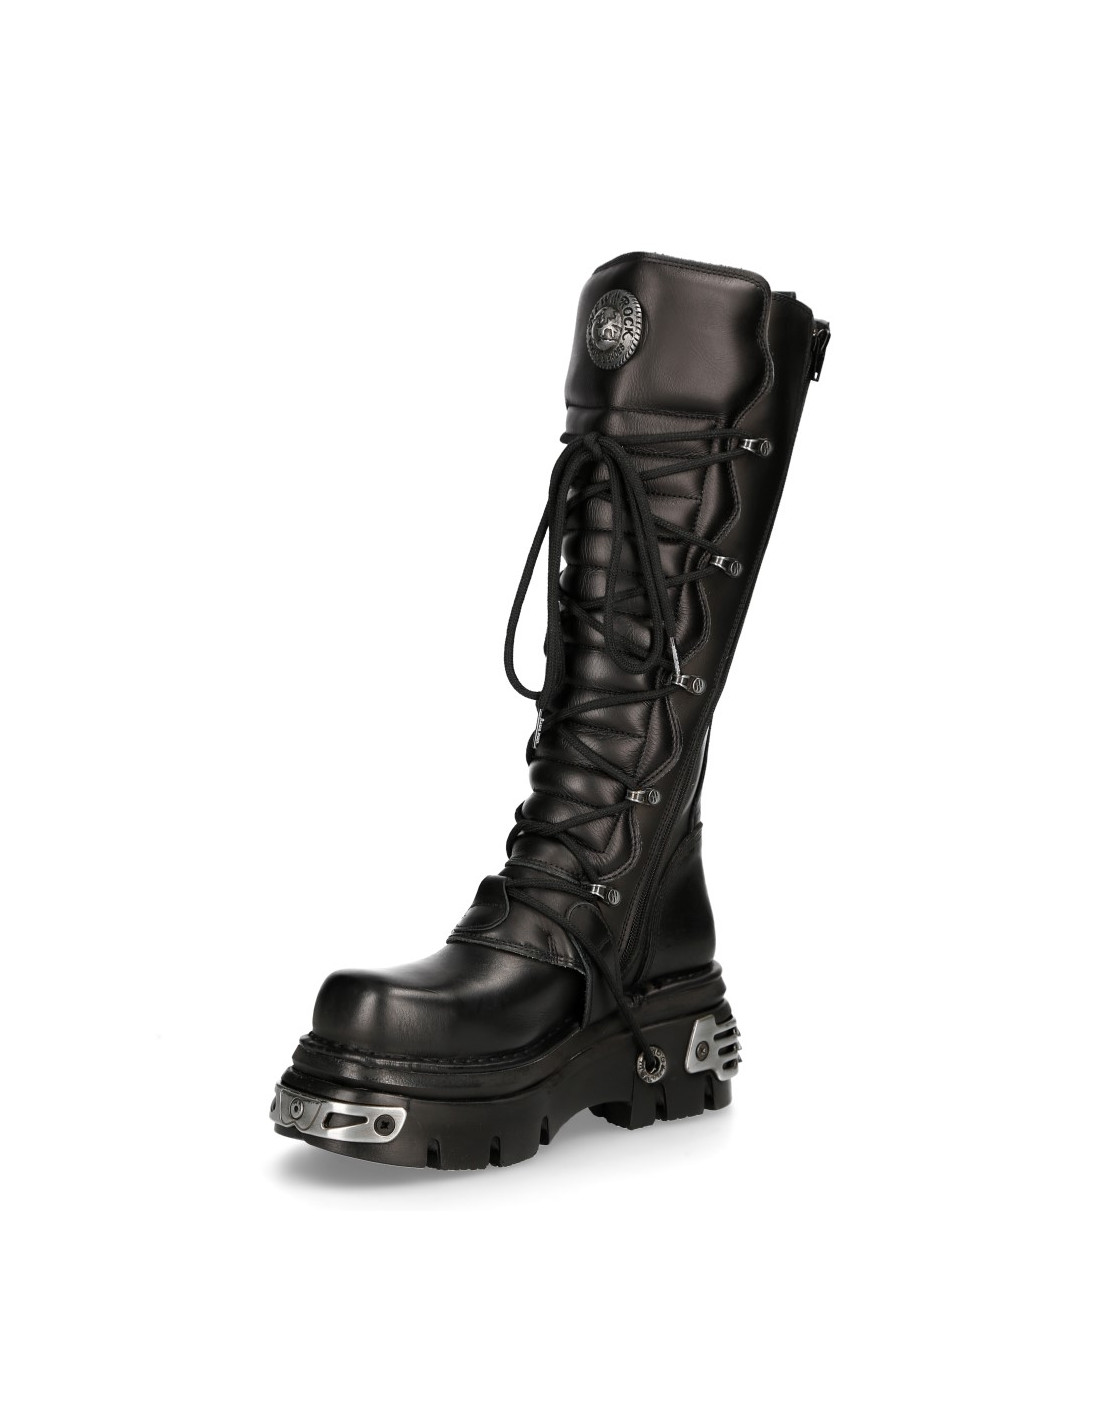 Unisex New Rock Boots NEWROCK NR M.272MT S1 Black